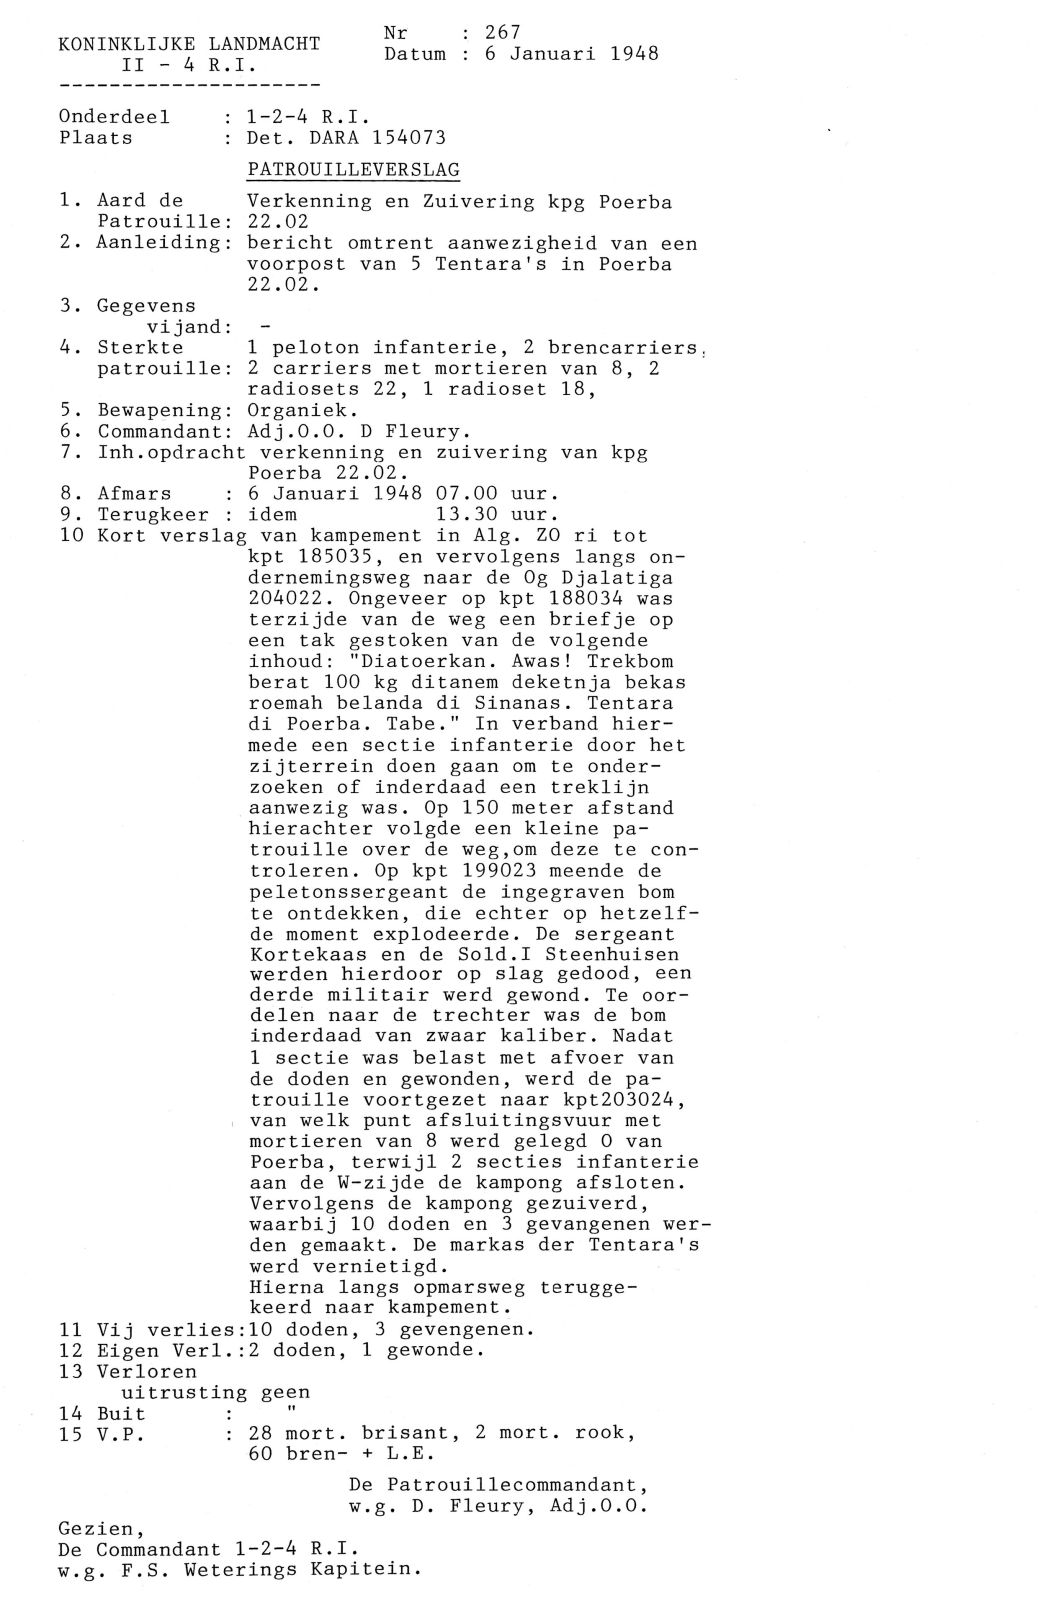 Patrouilleverslag 6 januari 1948